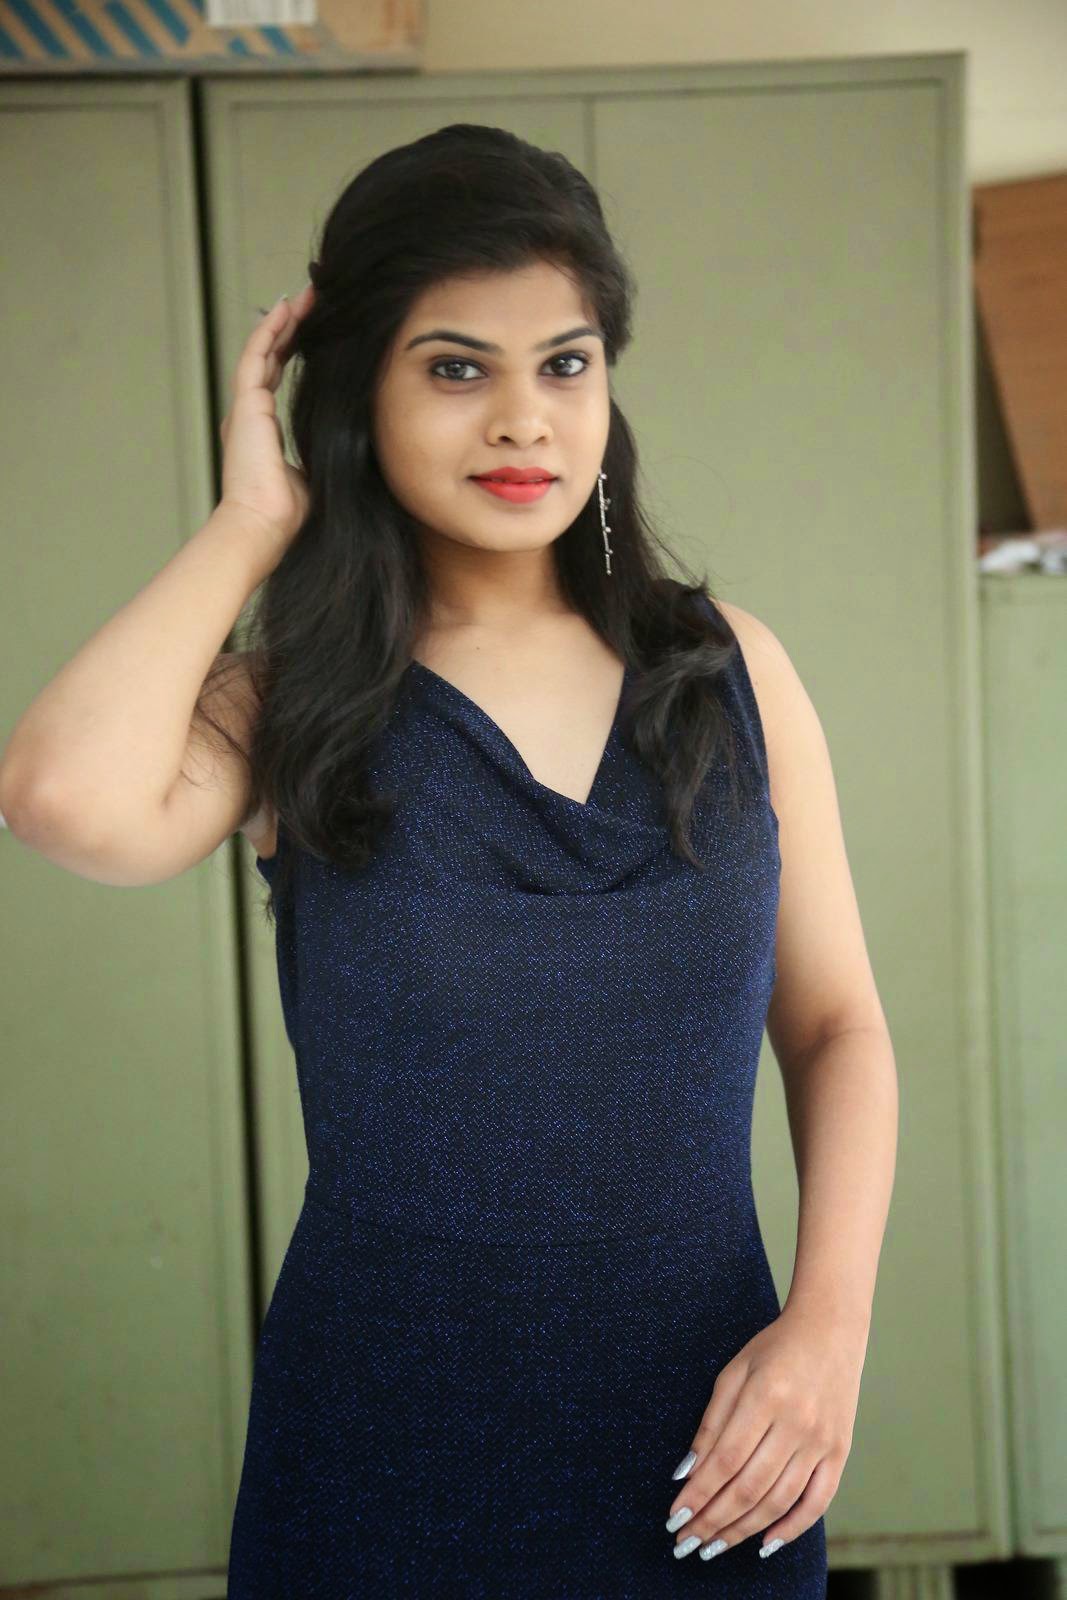 Alekhya Reddy Latest Stills in Blue Dress | Indian Girls Villa - Celebs  Beauty, Fashion and Entertainment